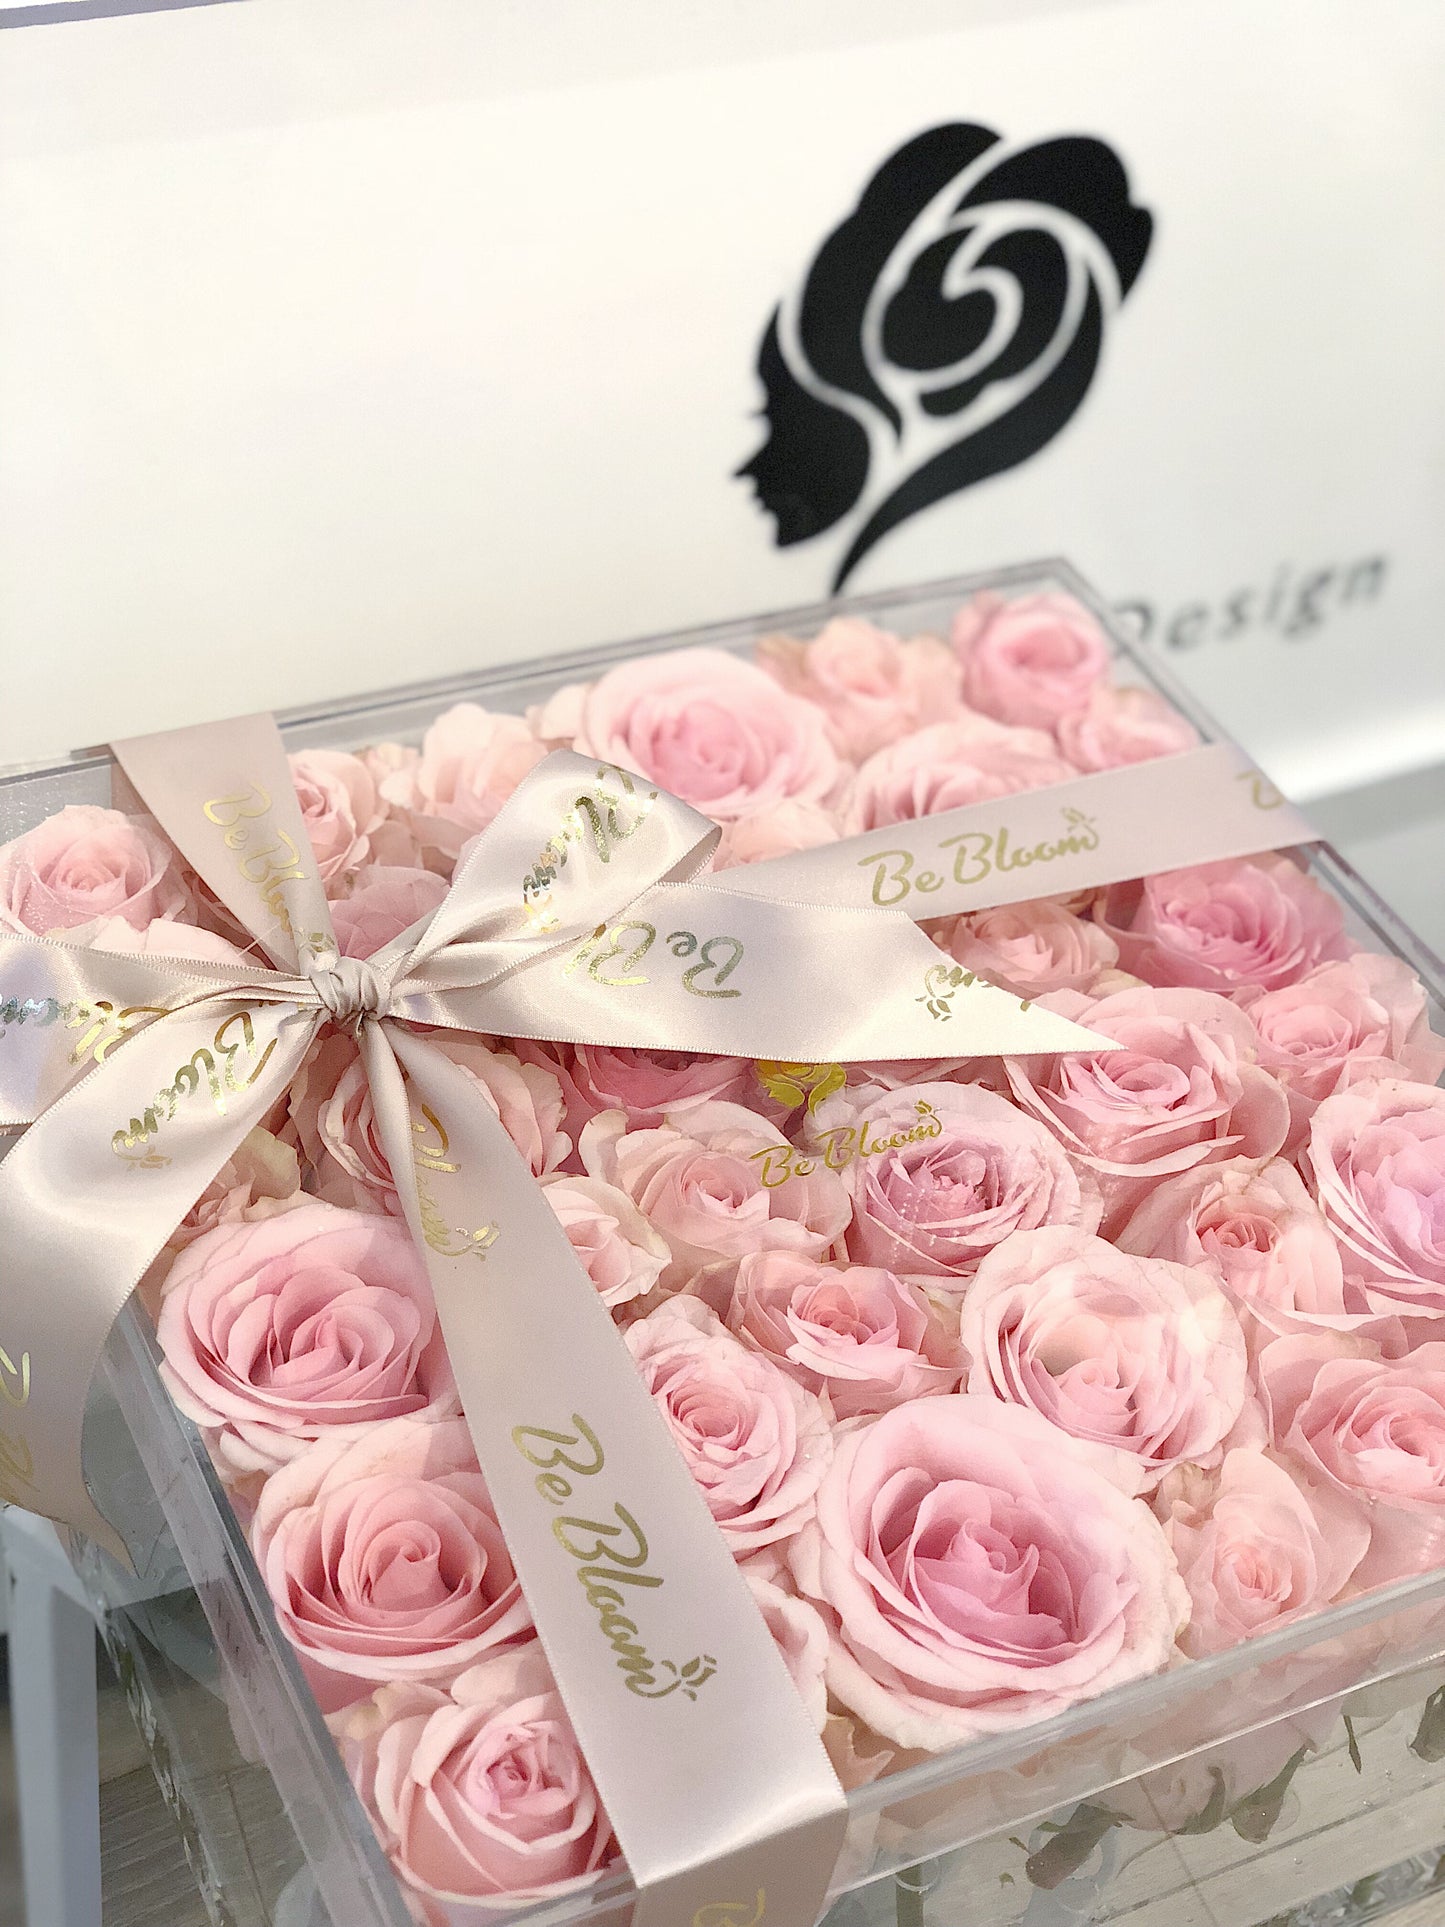 "Pure Love" Rose Box